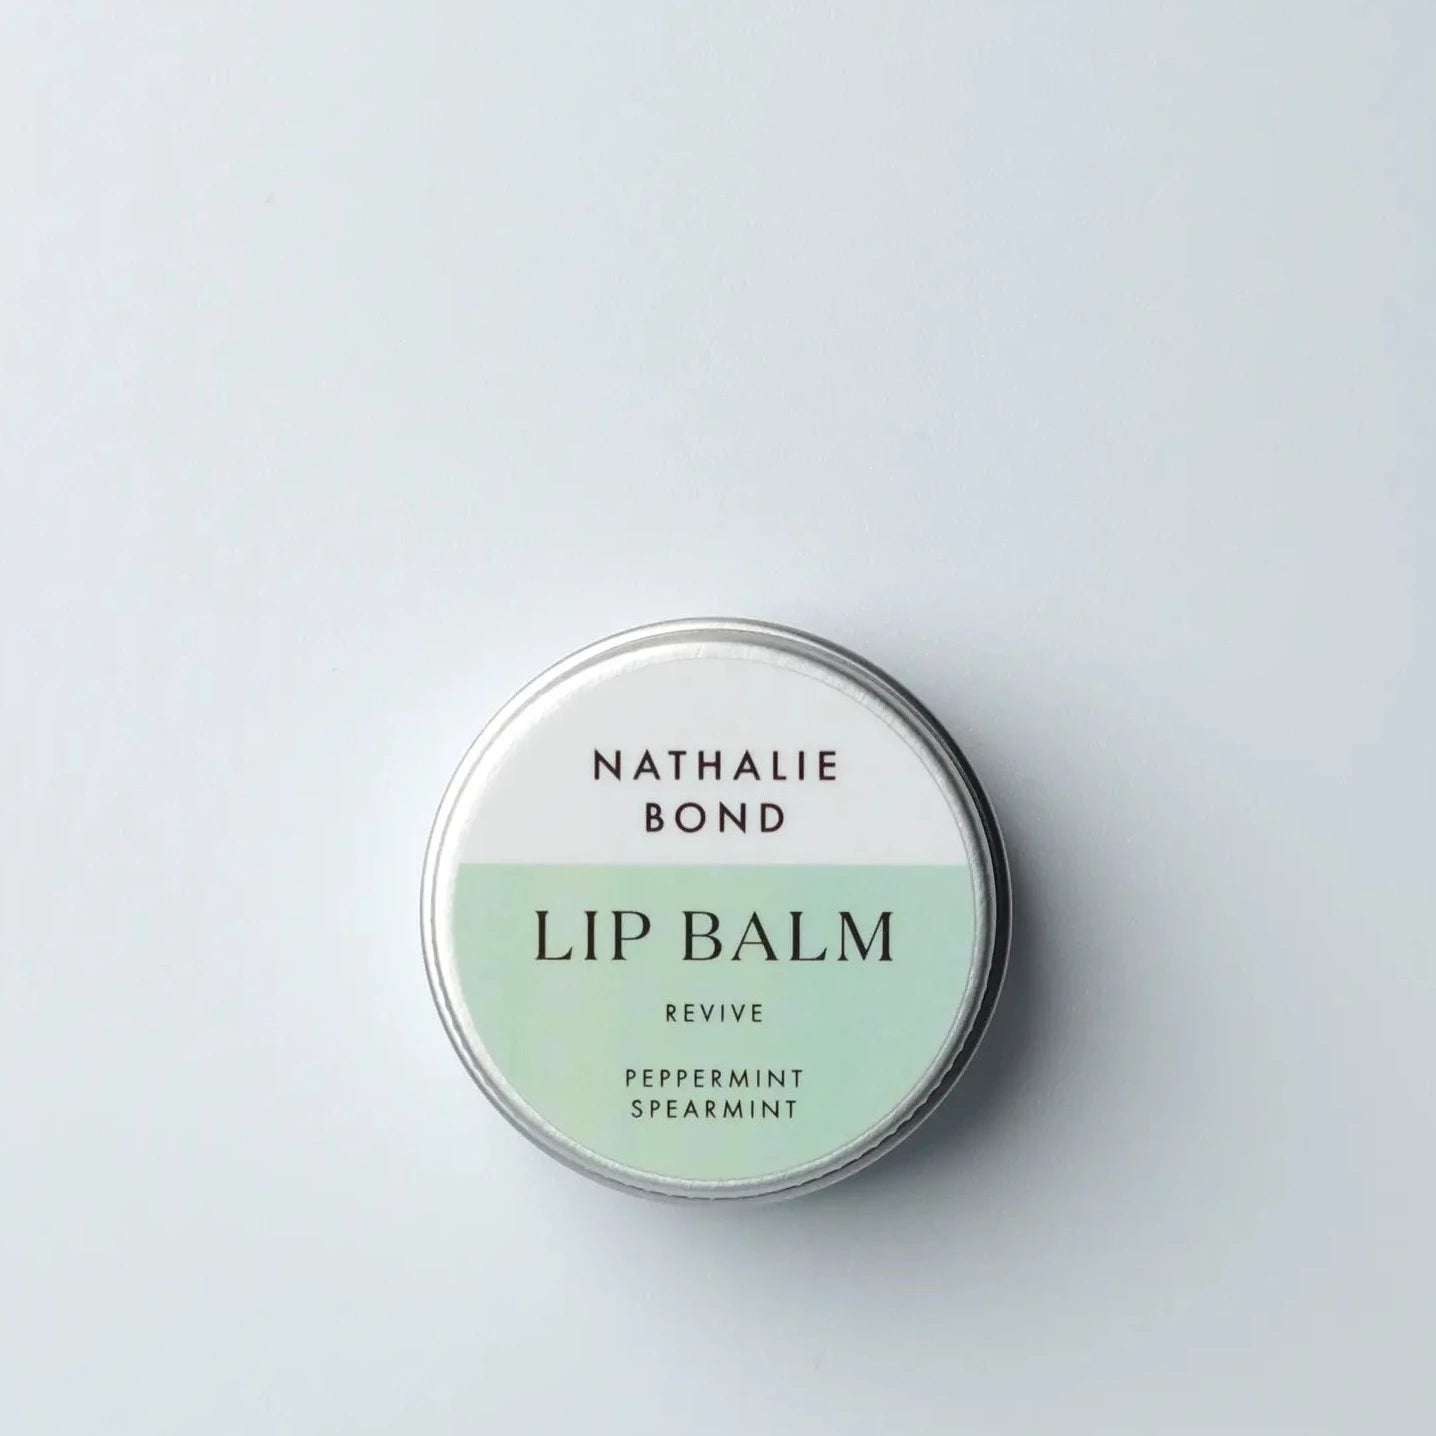 Revive Nathalie Bond lip balm